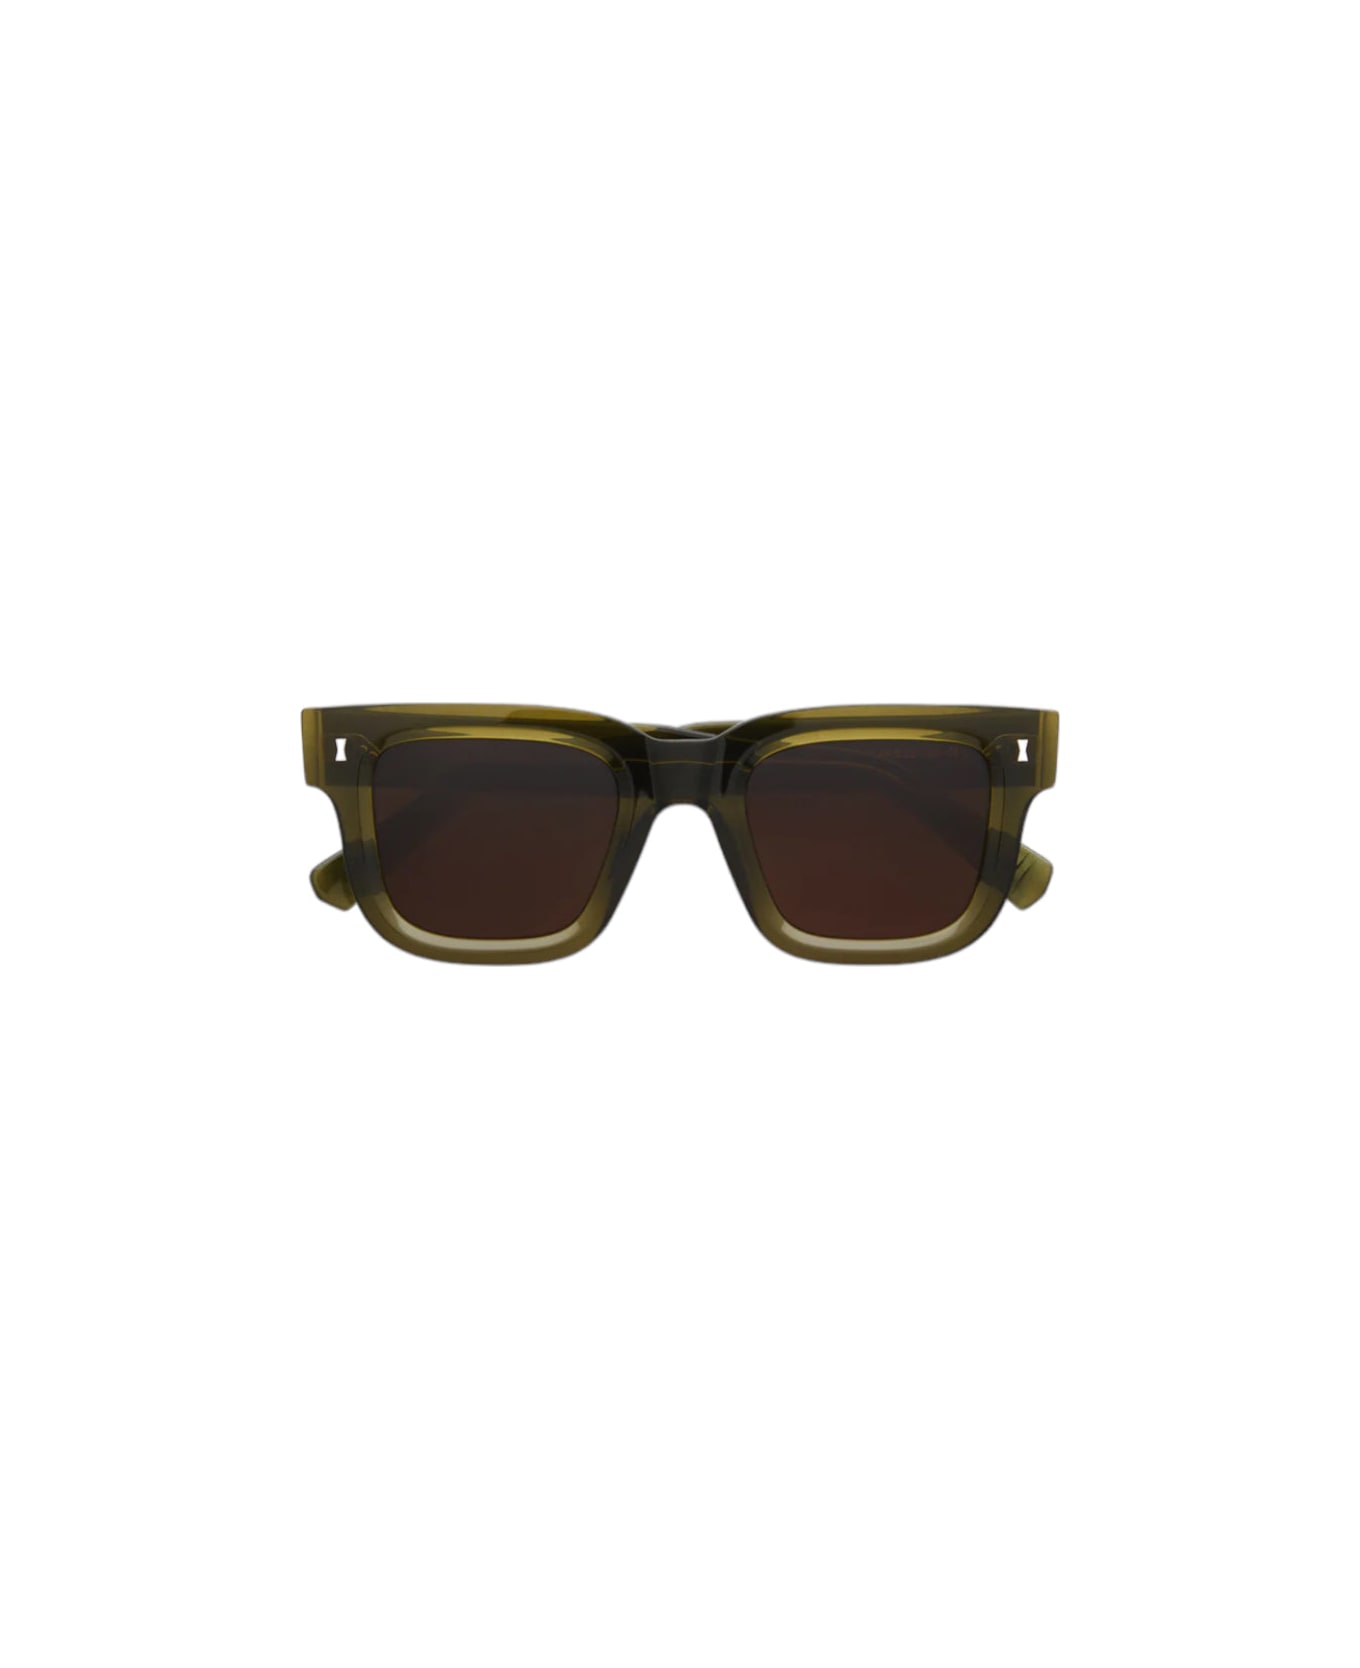 Cubitts Plender - Crystal Green Sunglasses